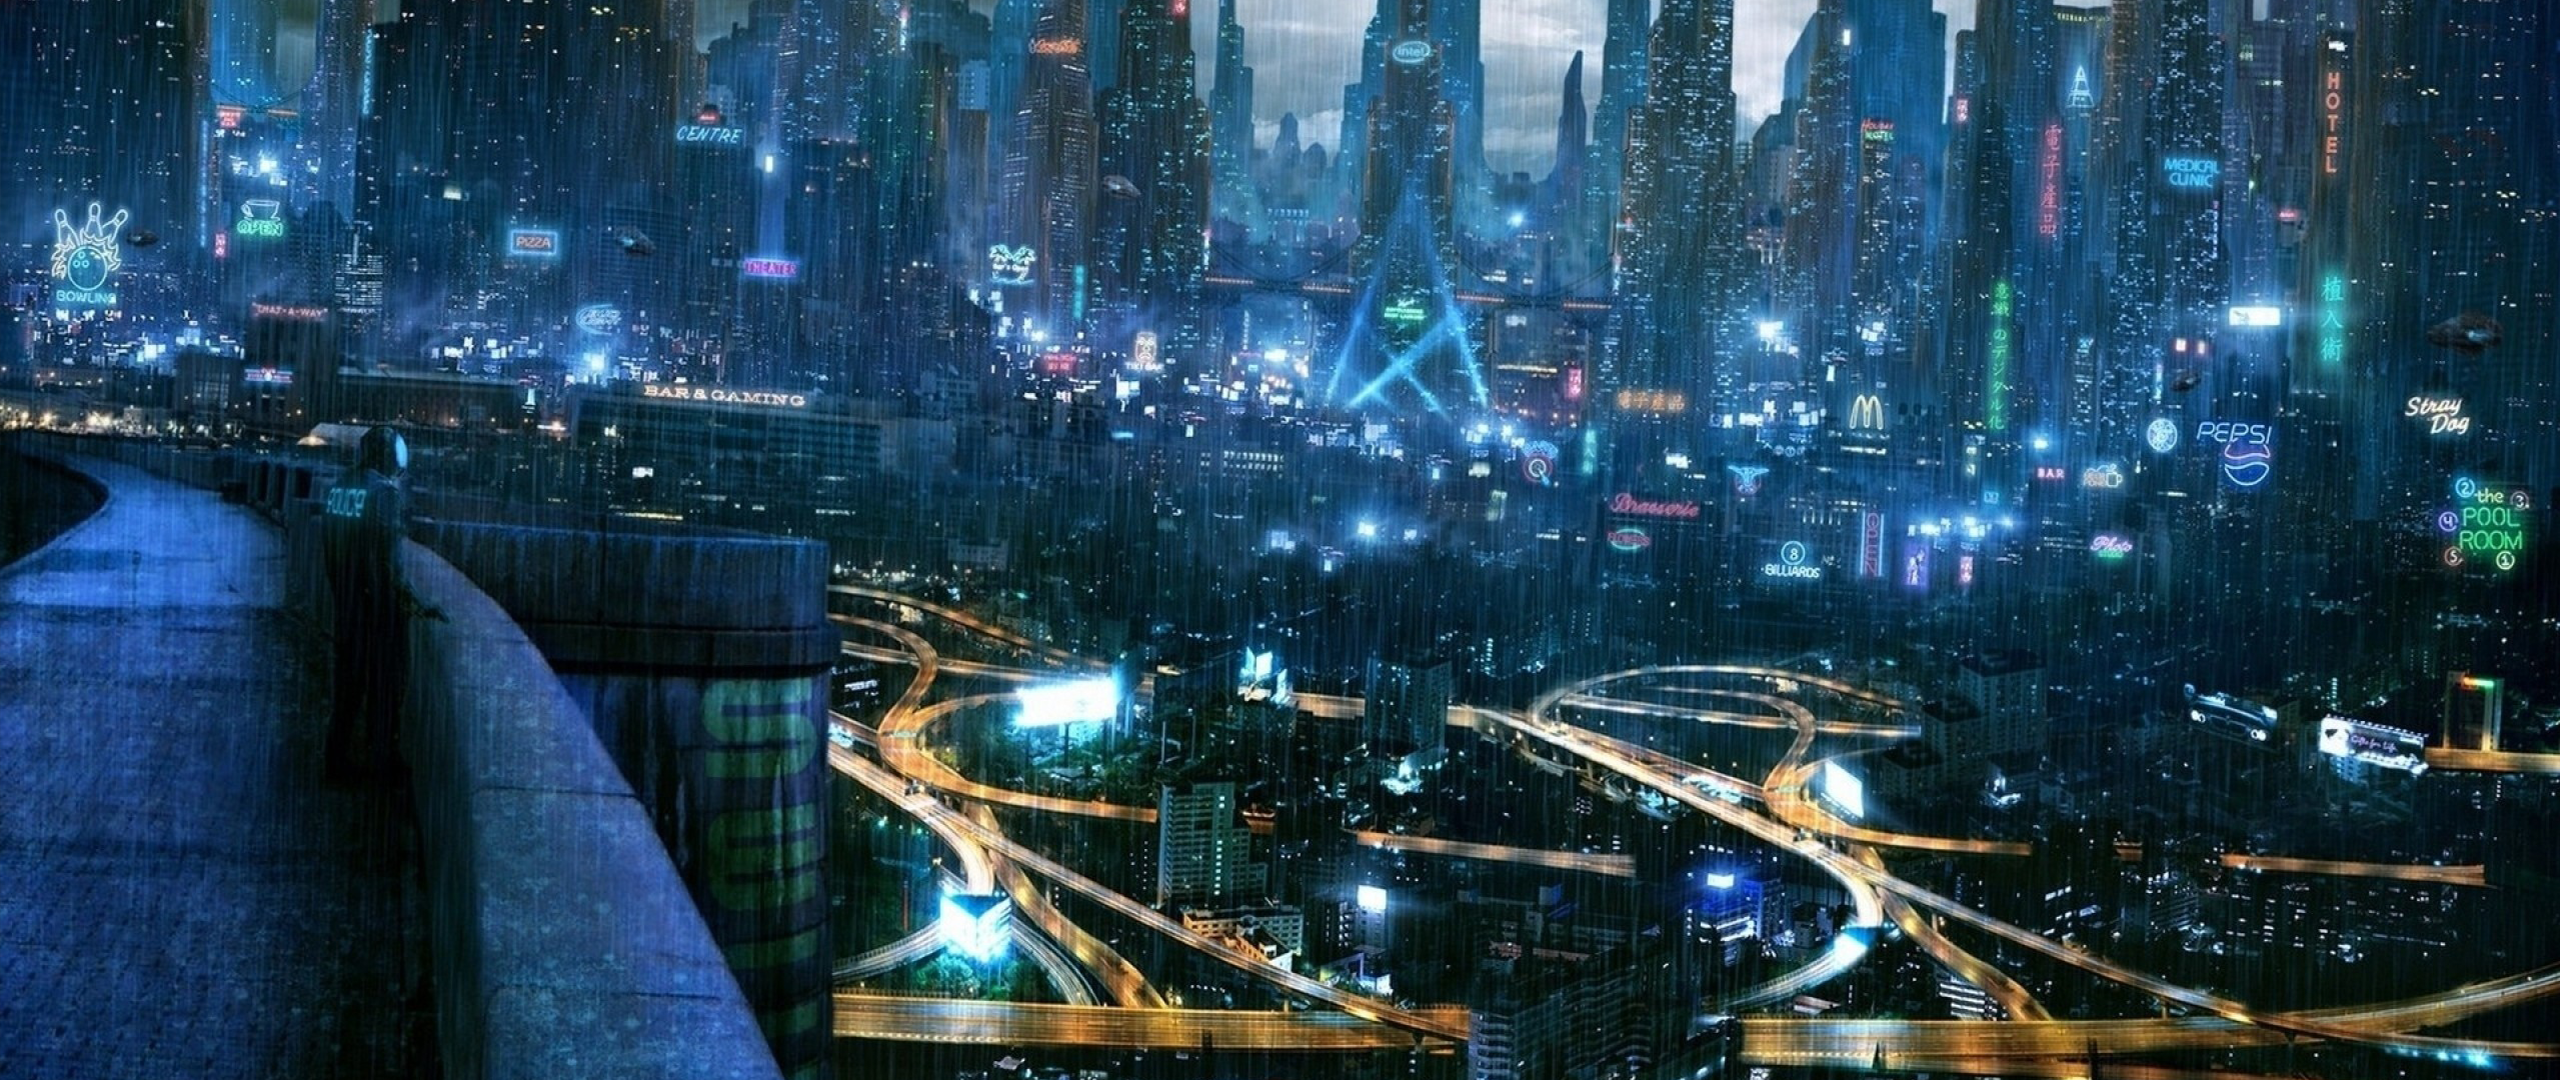 General 2560x1080 photography science fiction rain cityscape cyberpunk